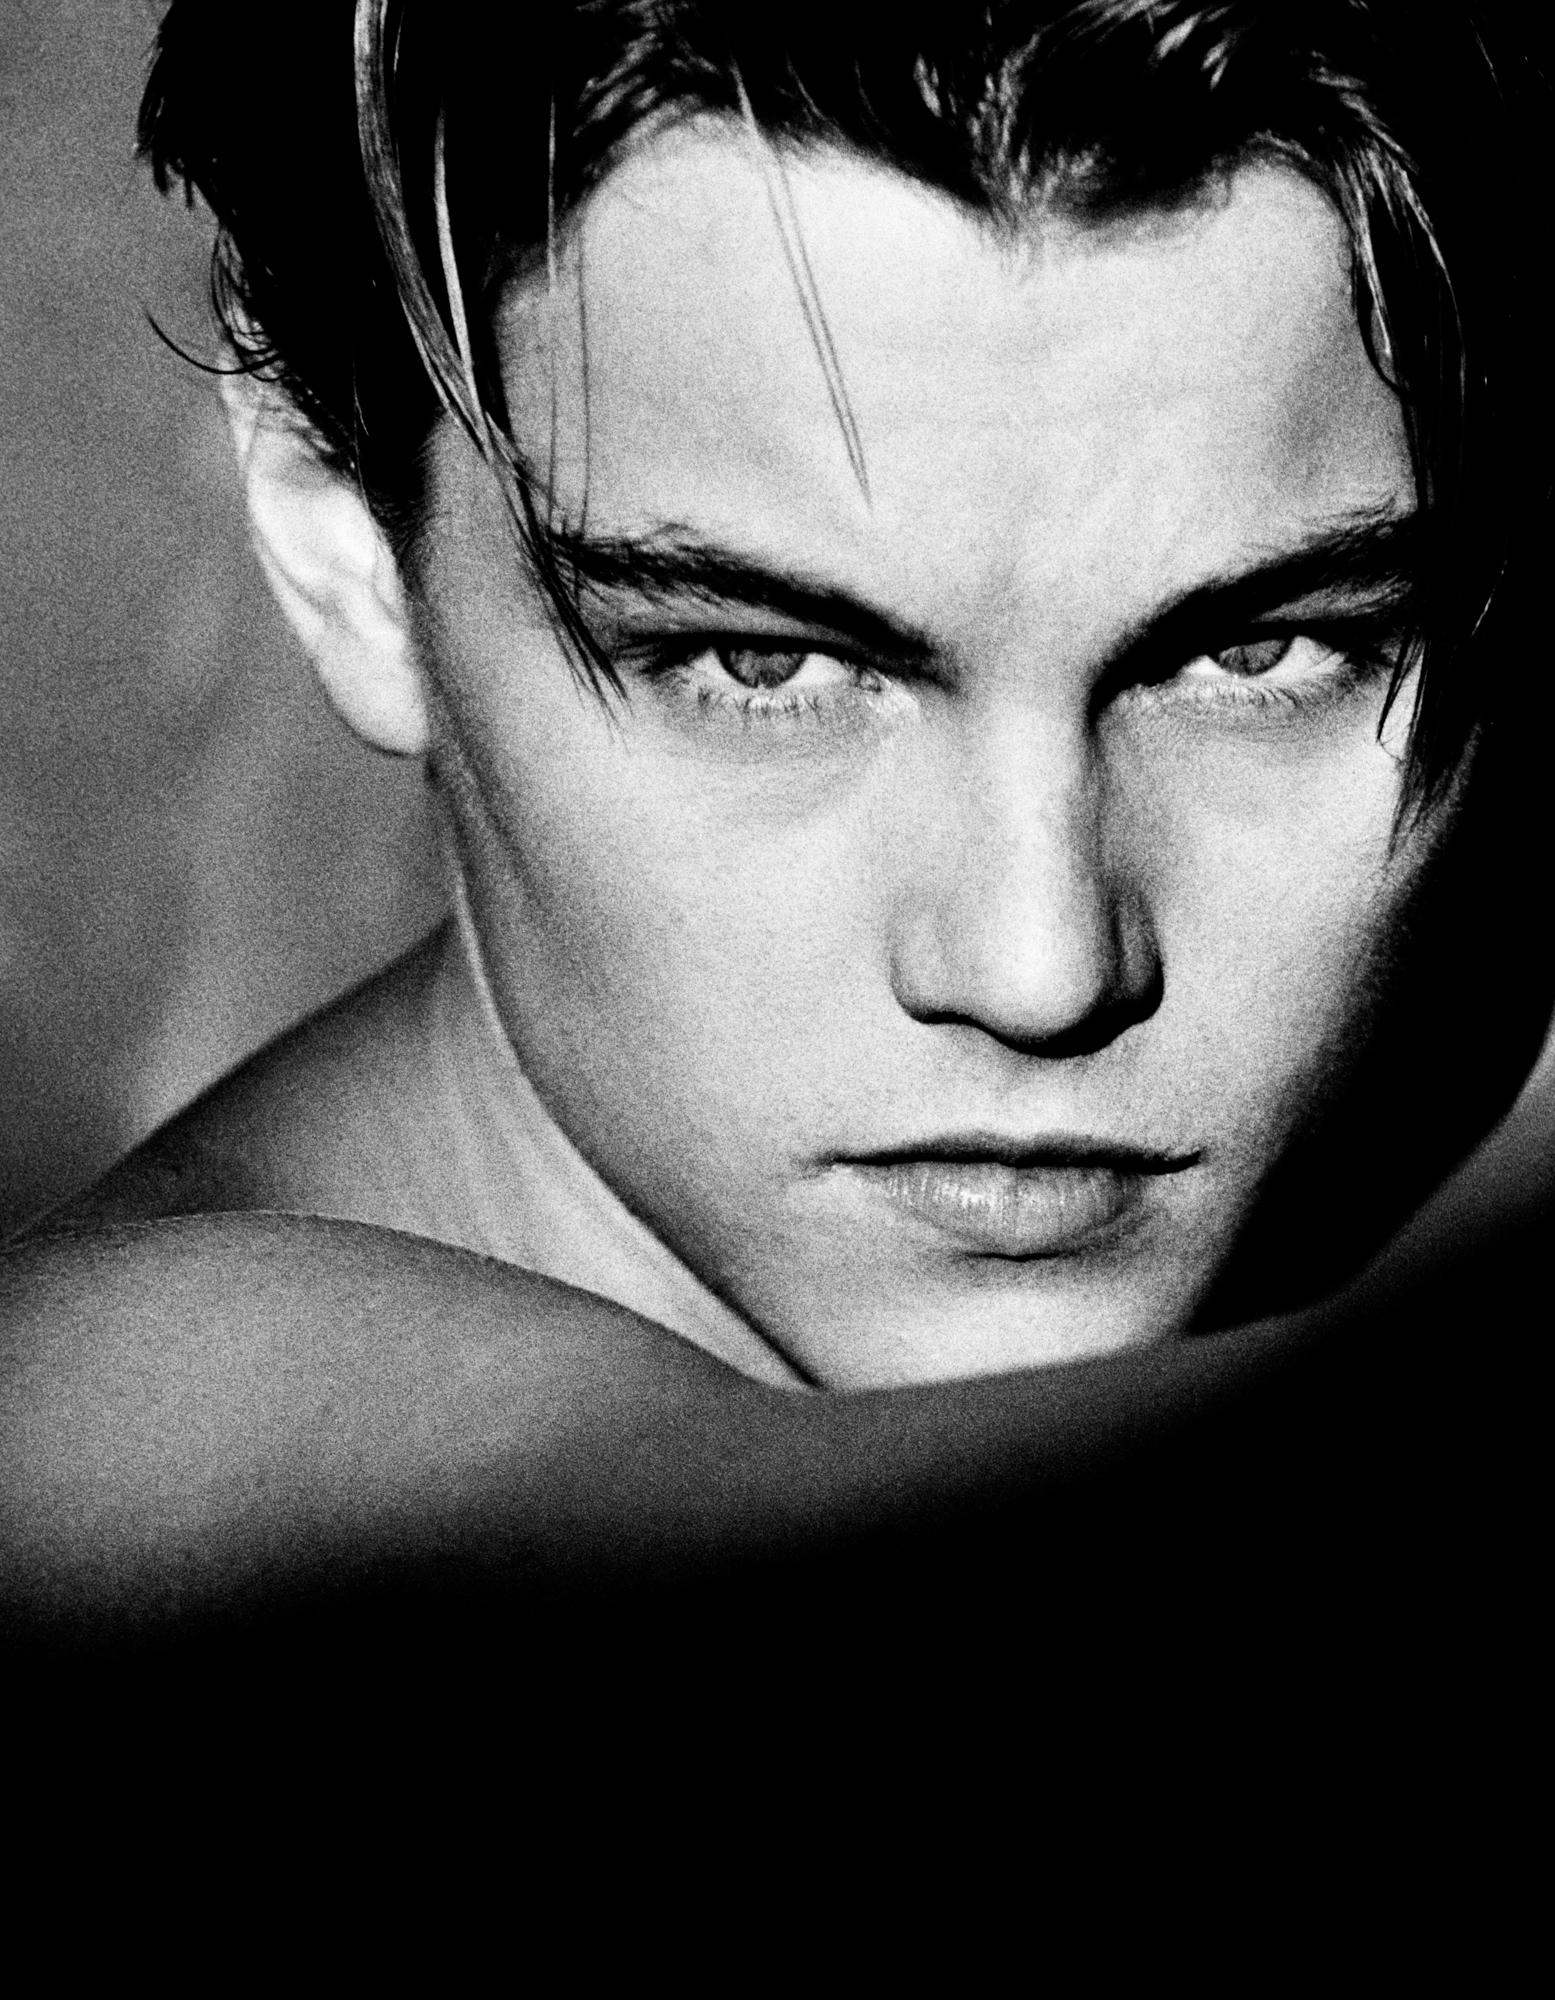 Greg Gorman Portrait Photograph - Leonardo Di Caprio, LA, 21st Century, Contemporary, Celebrity, Photography